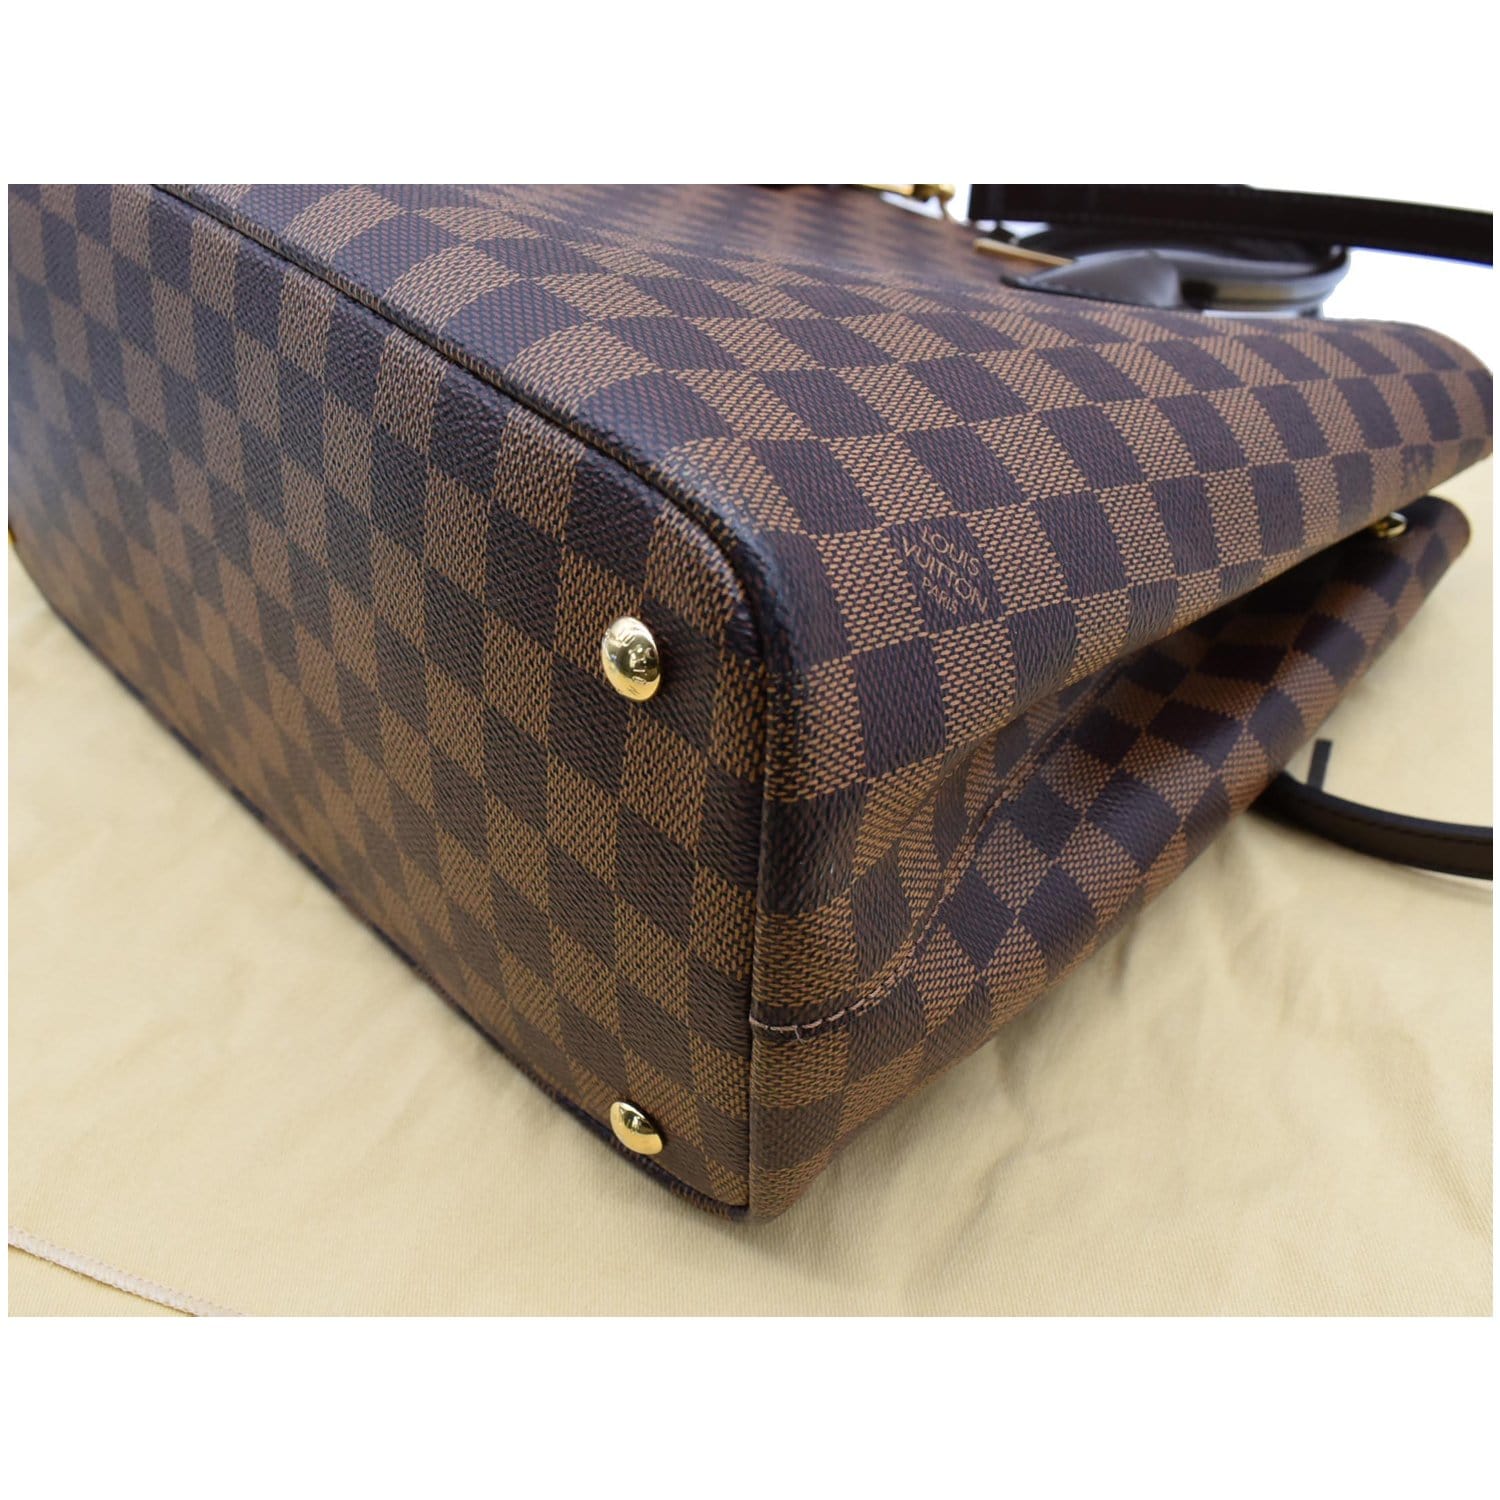 Louis Vuitton Damier Ebene Kensington Tote - Brown Totes, Handbags